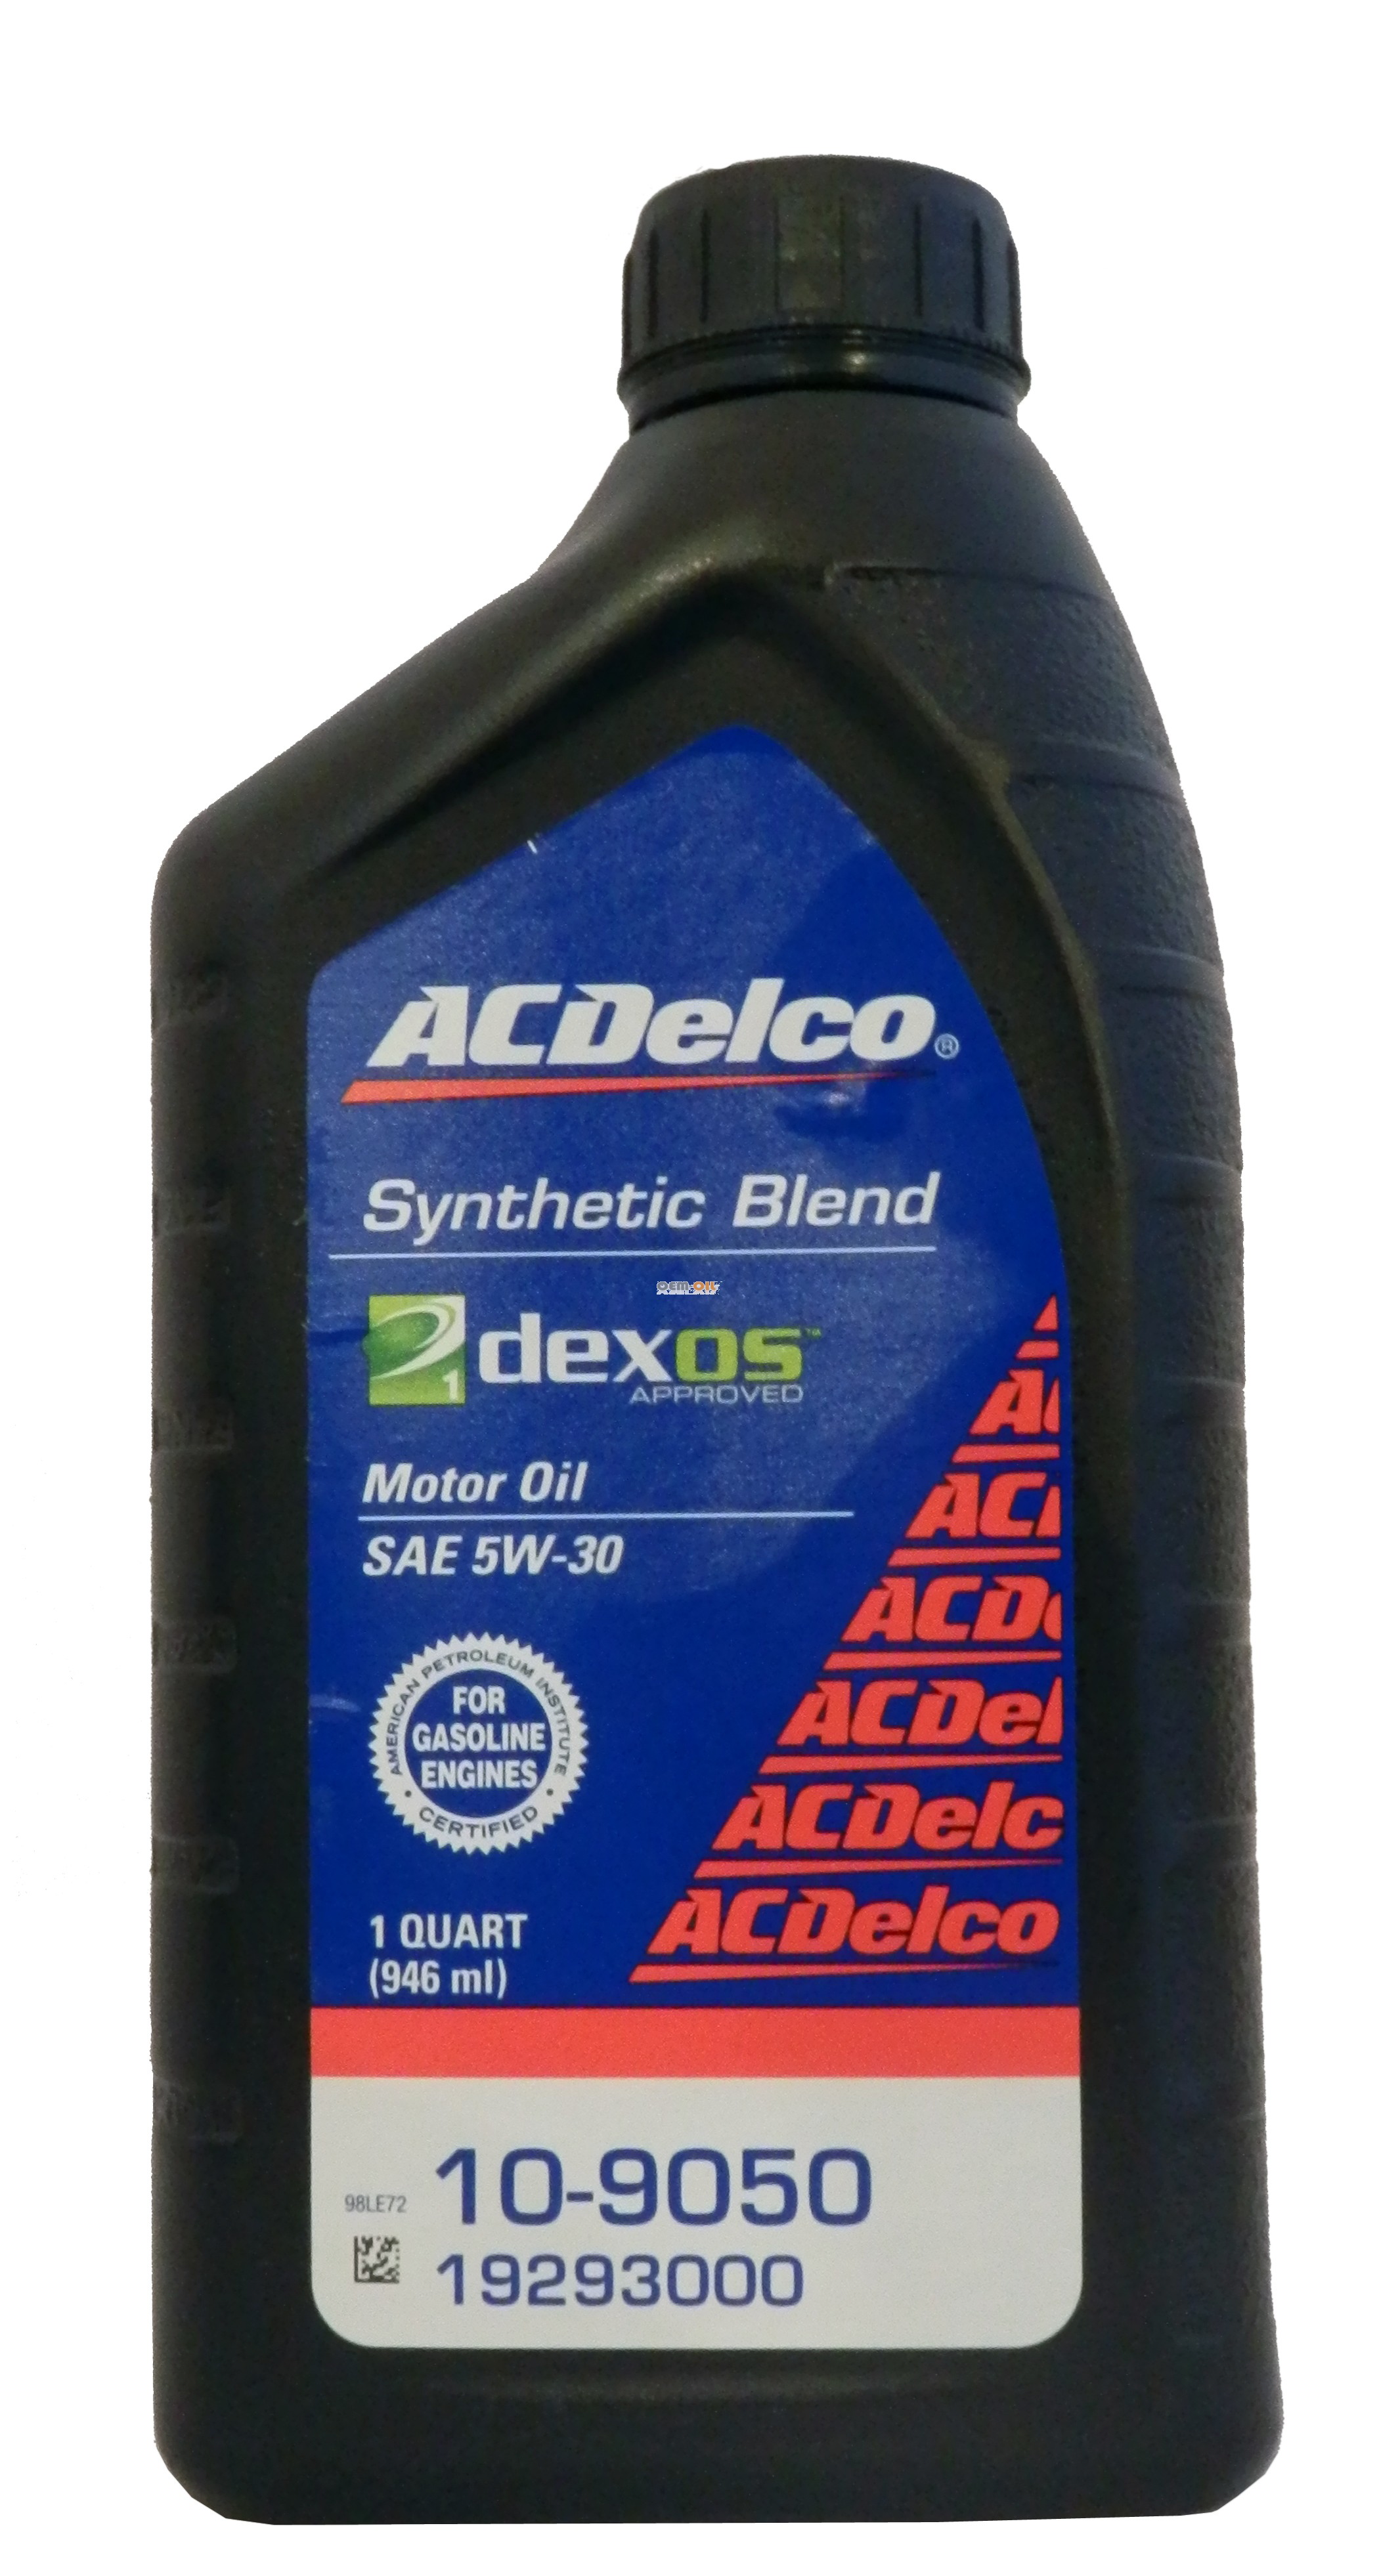 General Motors AC Delco Dexos 1 Synthetic Blend